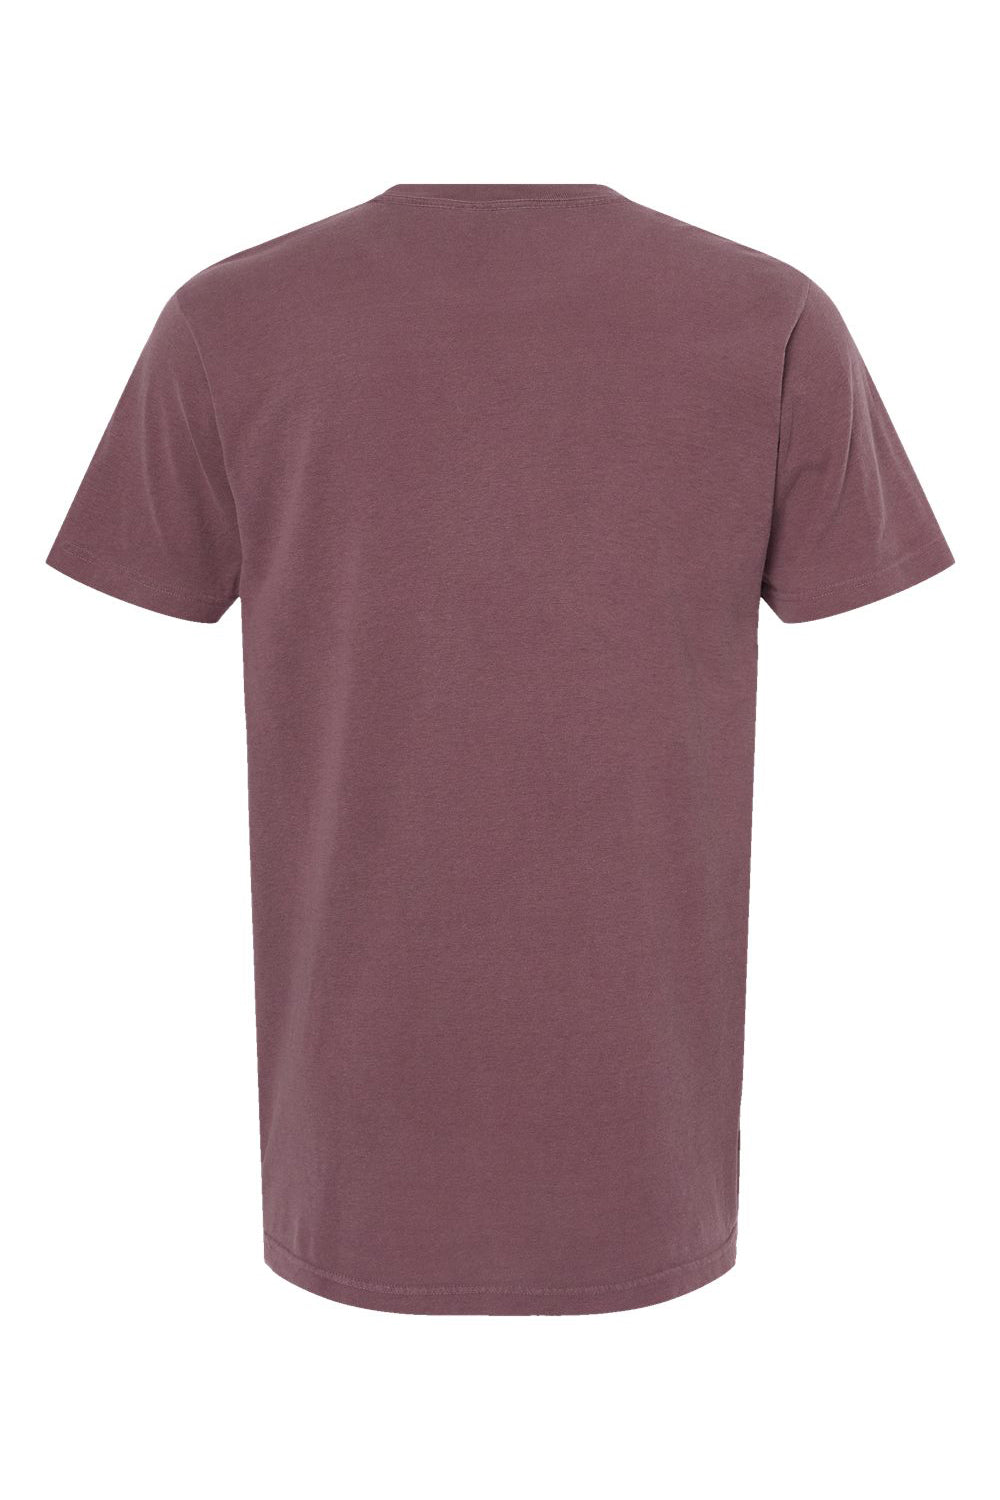 M&O 6500M Mens Vintage Garment Dyed Short Sleeve Crewneck T-Shirt Vineyard Red Flat Back